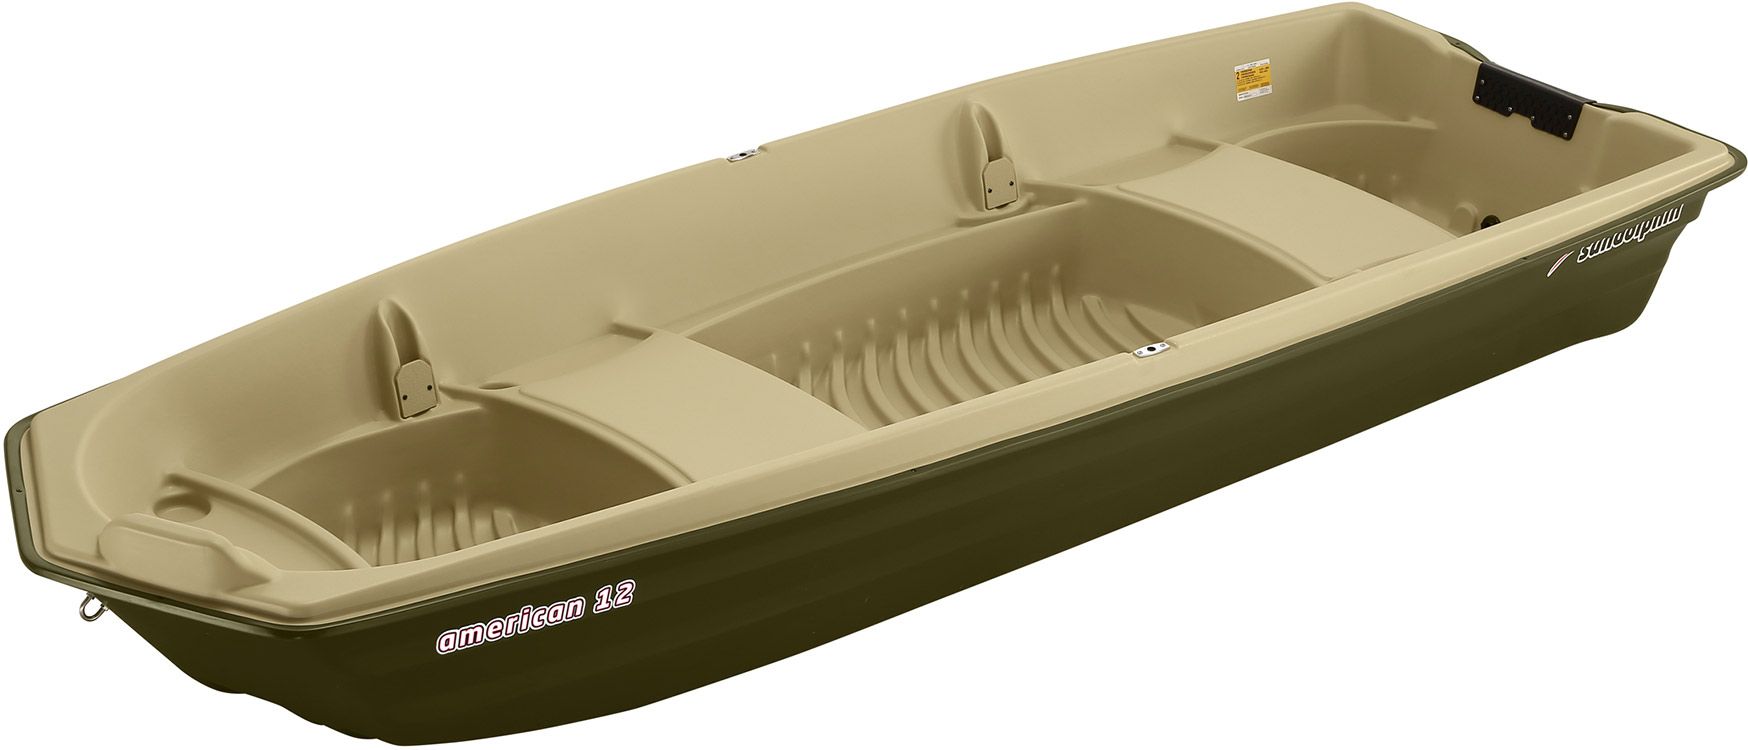 89+ 12 14 Mr John Jon Boat Boatdesign - Aluminum Boat On 